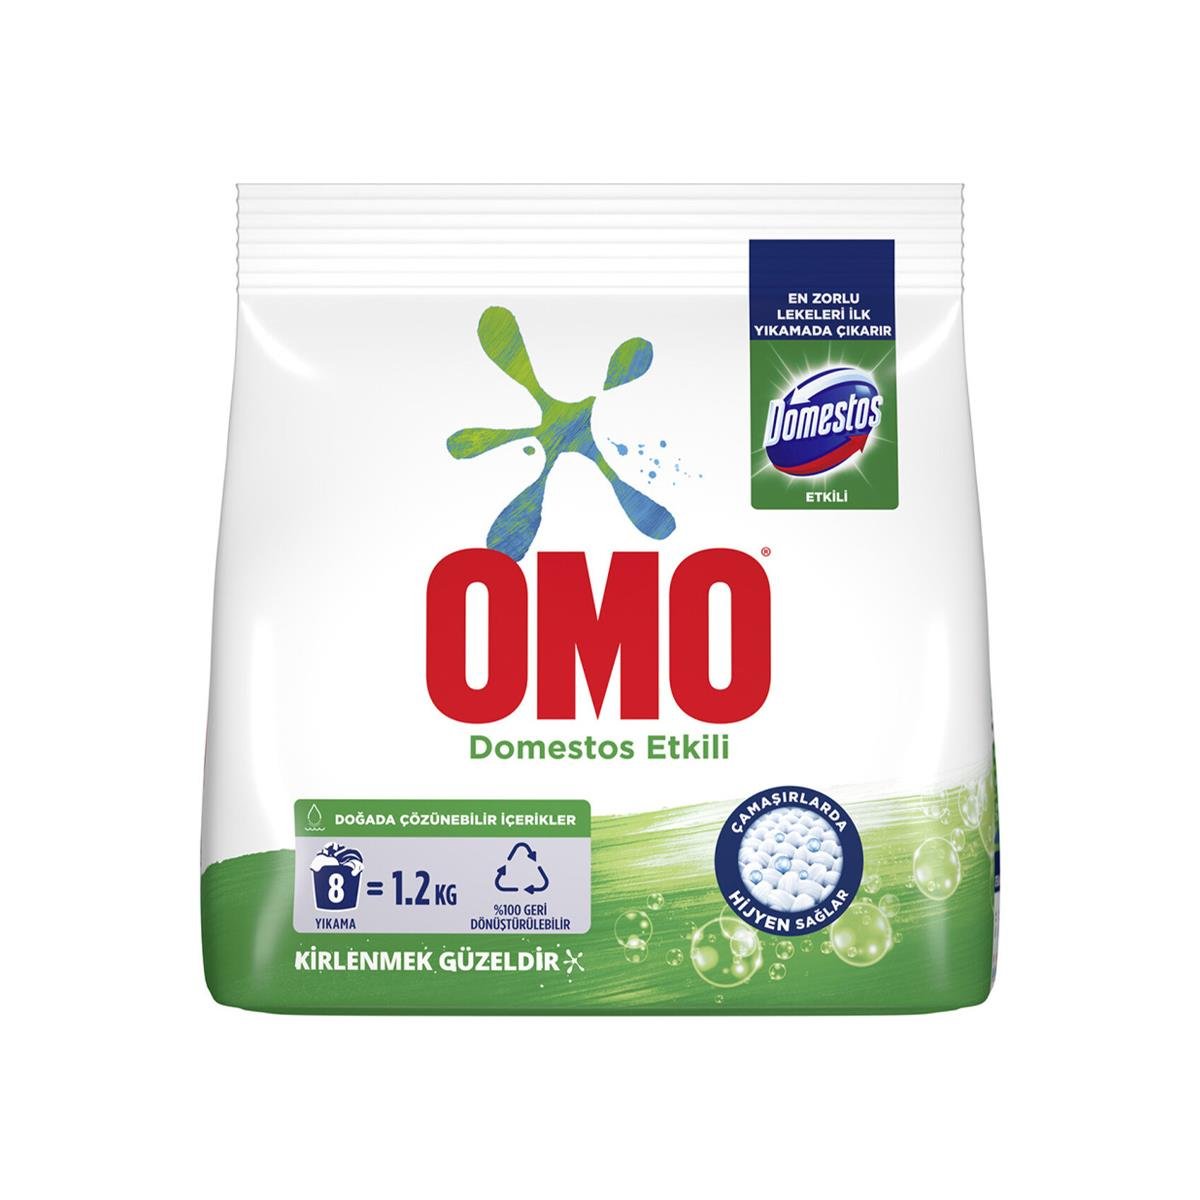 Omo Domestos Etkili Çamaşır Deterjanı 1.2 Kg